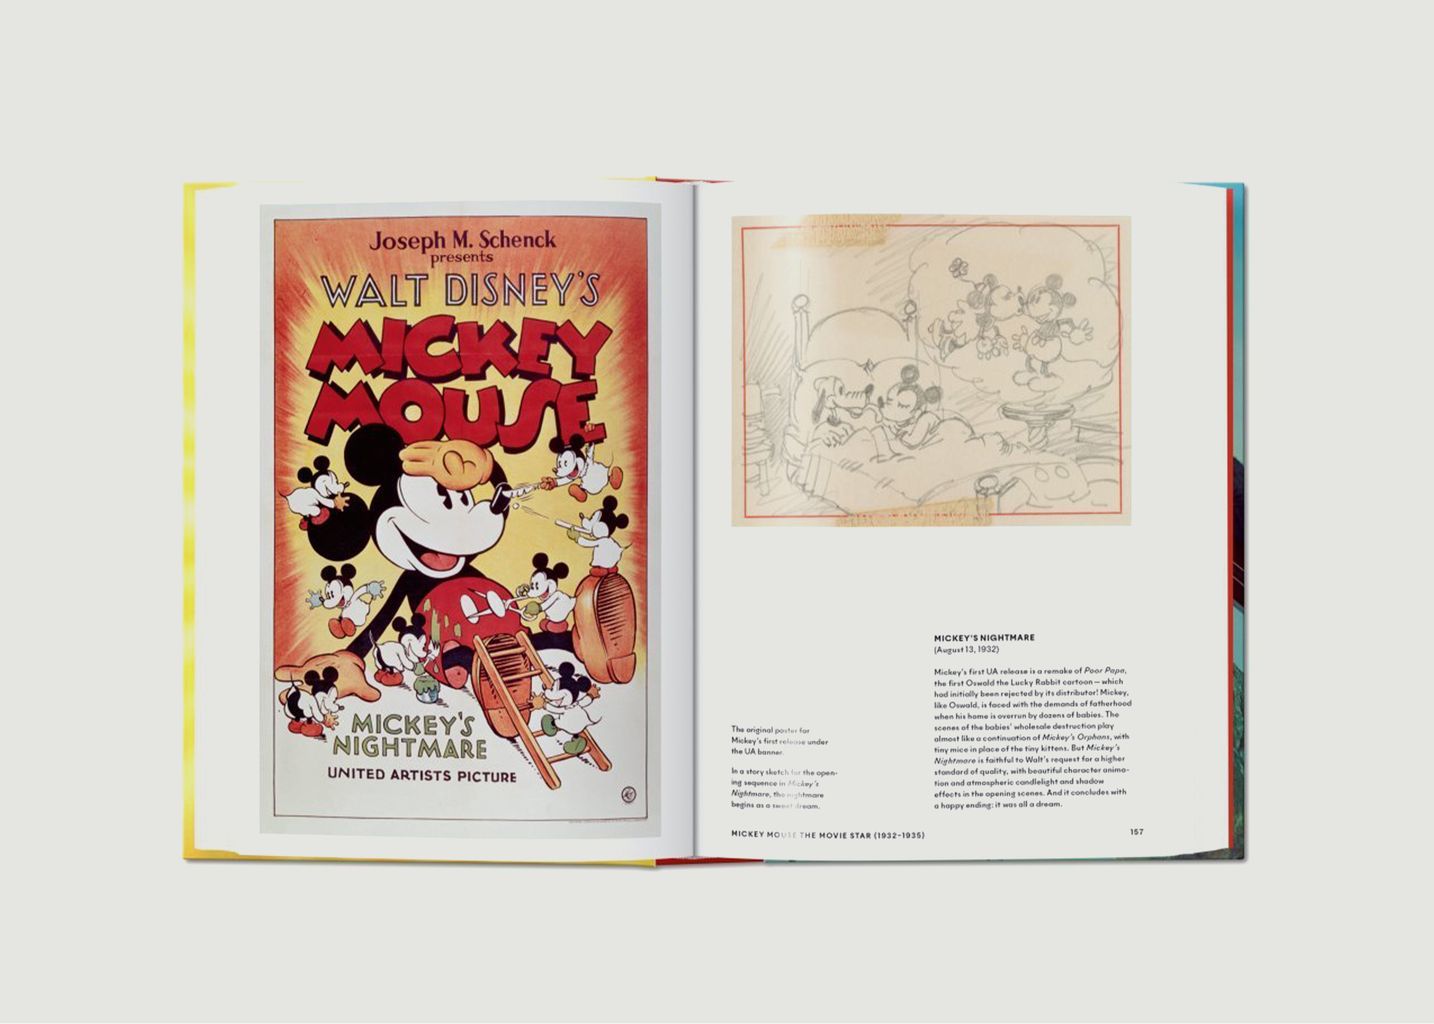 Walt Disney's Mickey Mouse All History - Taschen